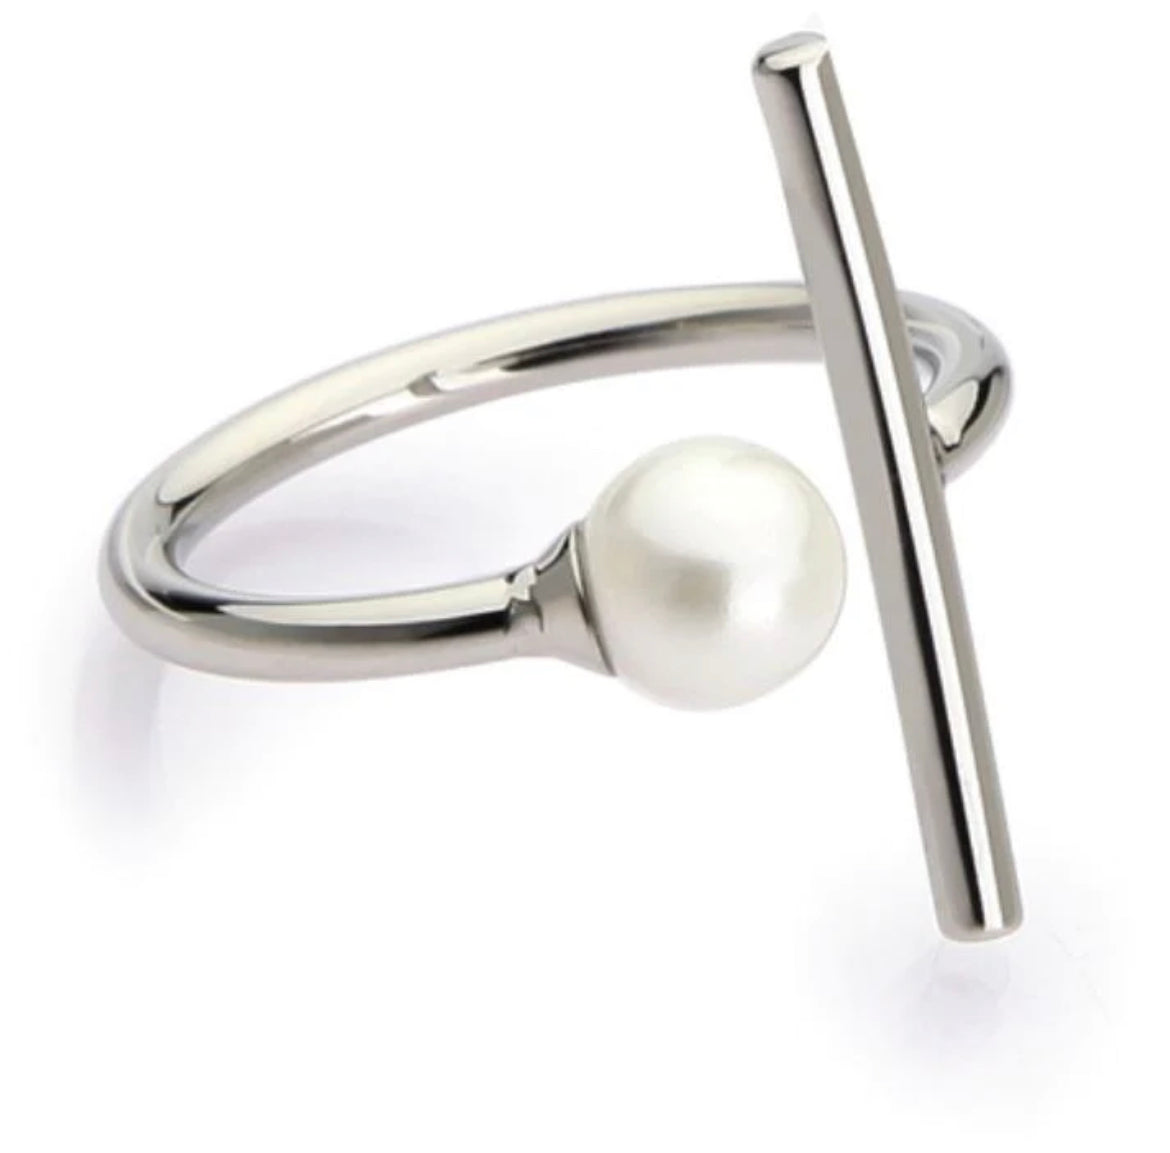 Single Pearl Ring